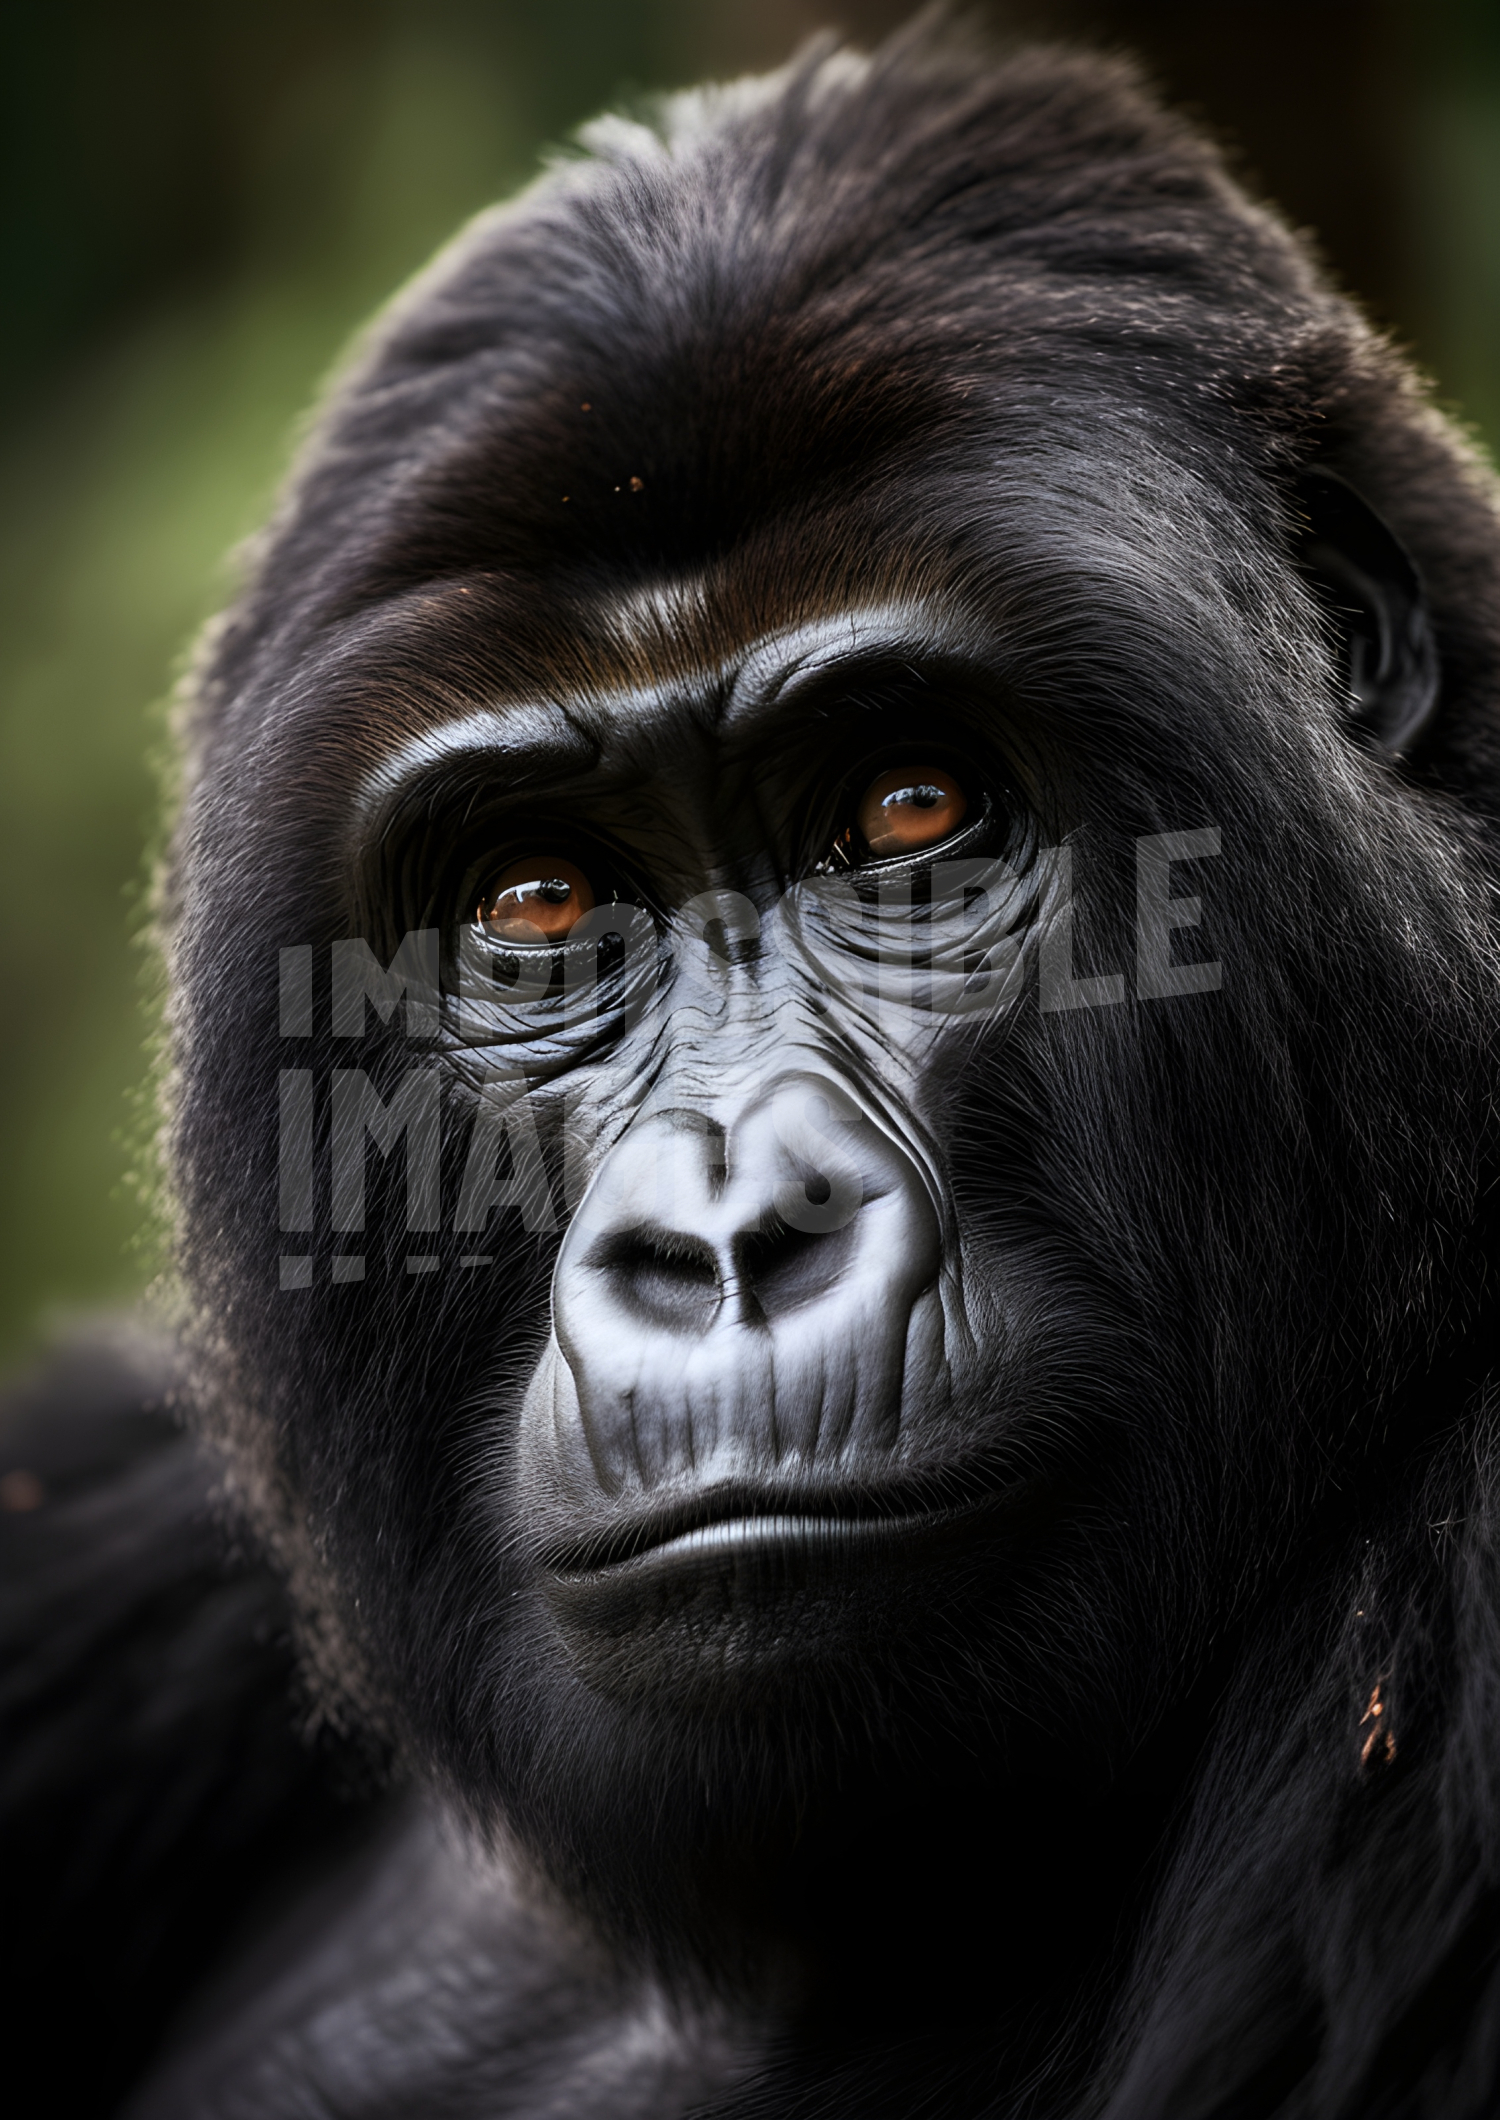 A close up of a black gorilla face